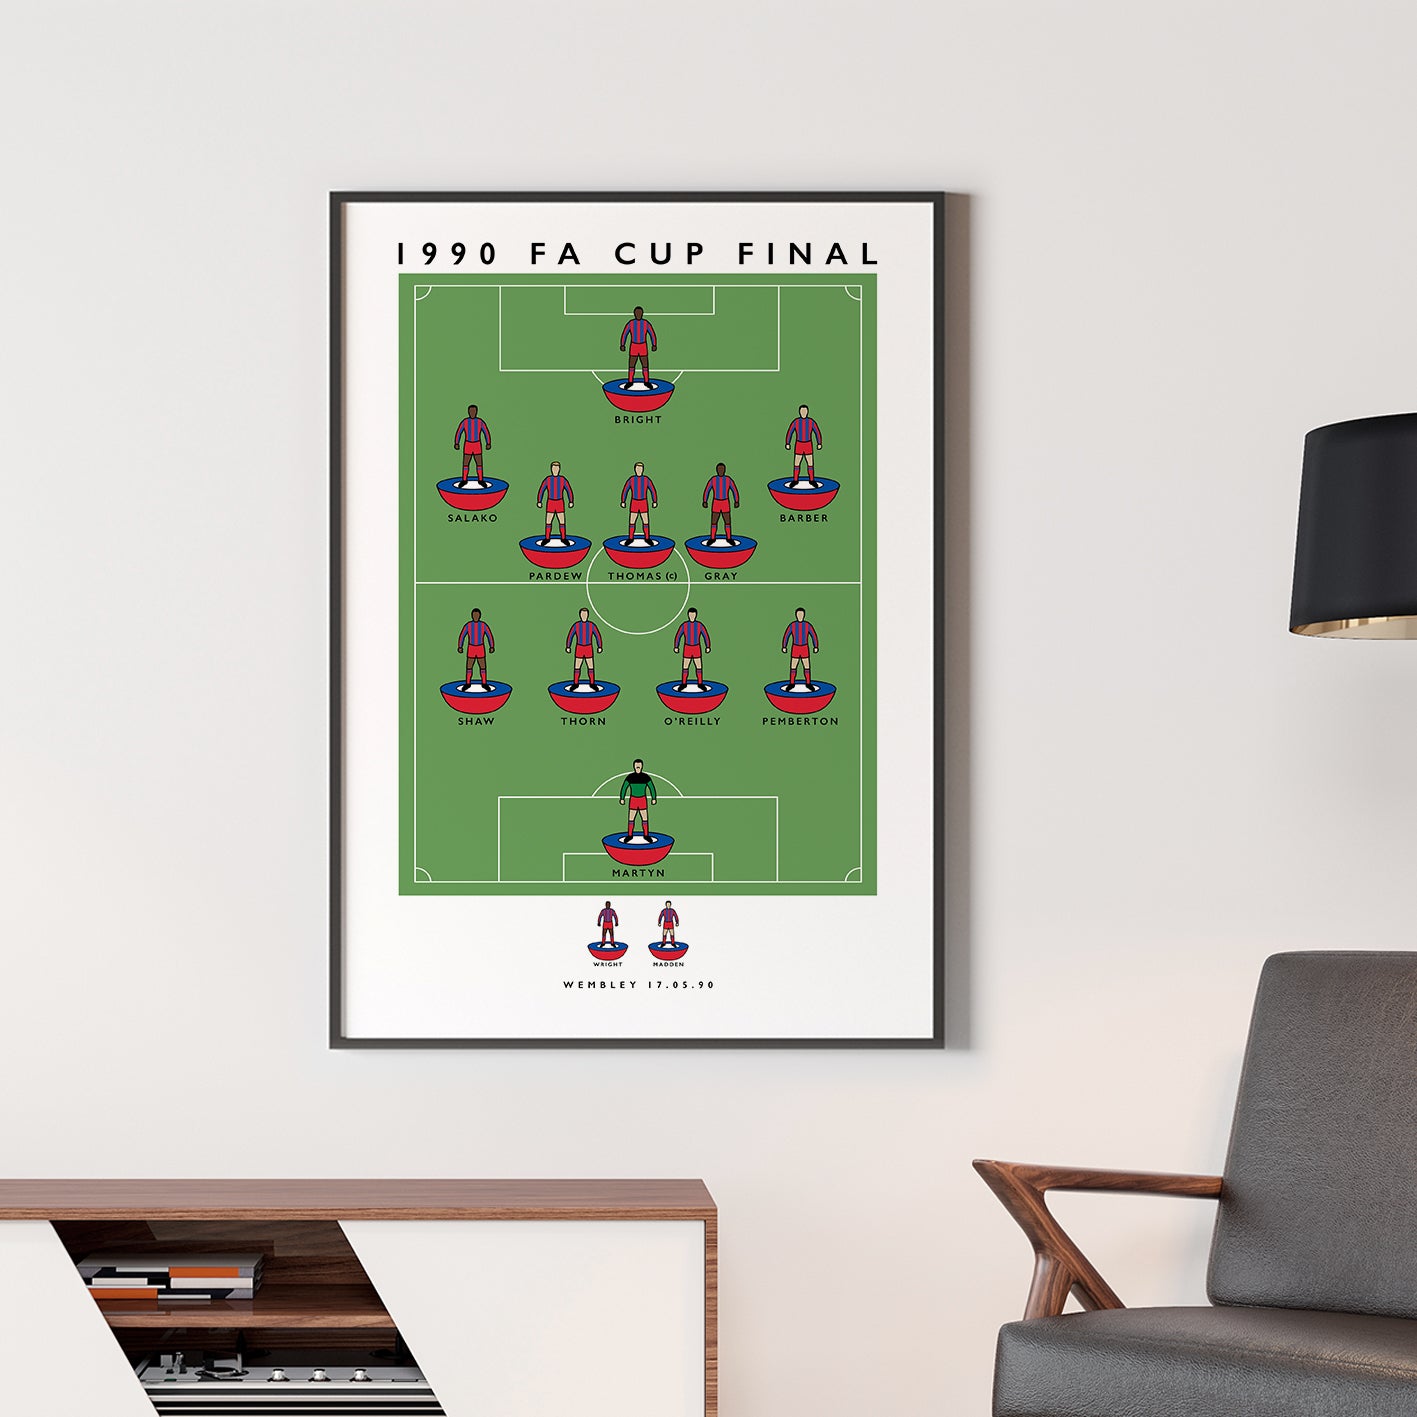 CPFC 1990 FA Cup Final - Print